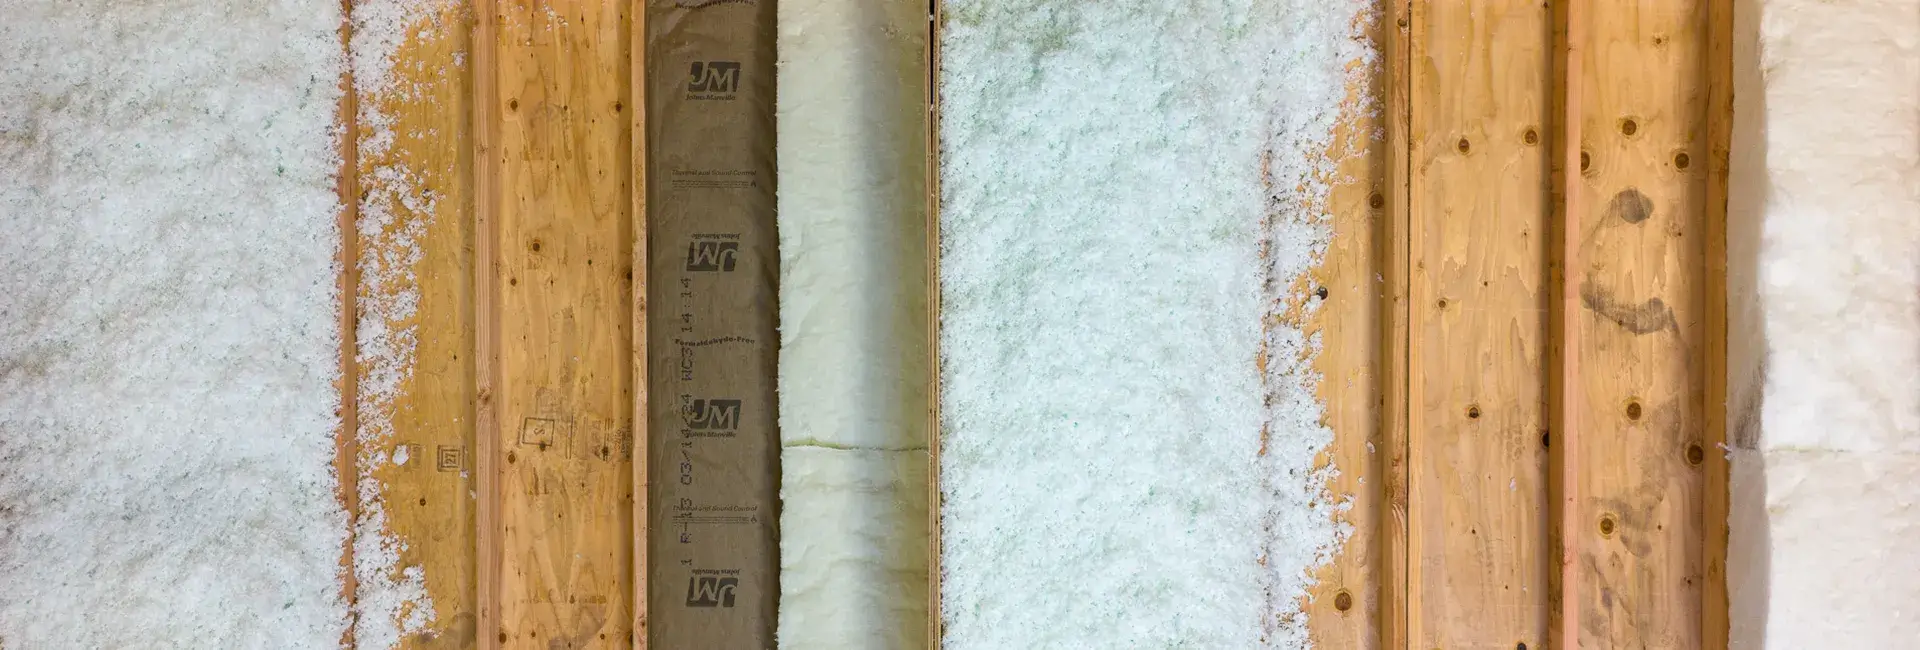 Various types of attic insulation, including fiberglass blow-in and fiberglass batt